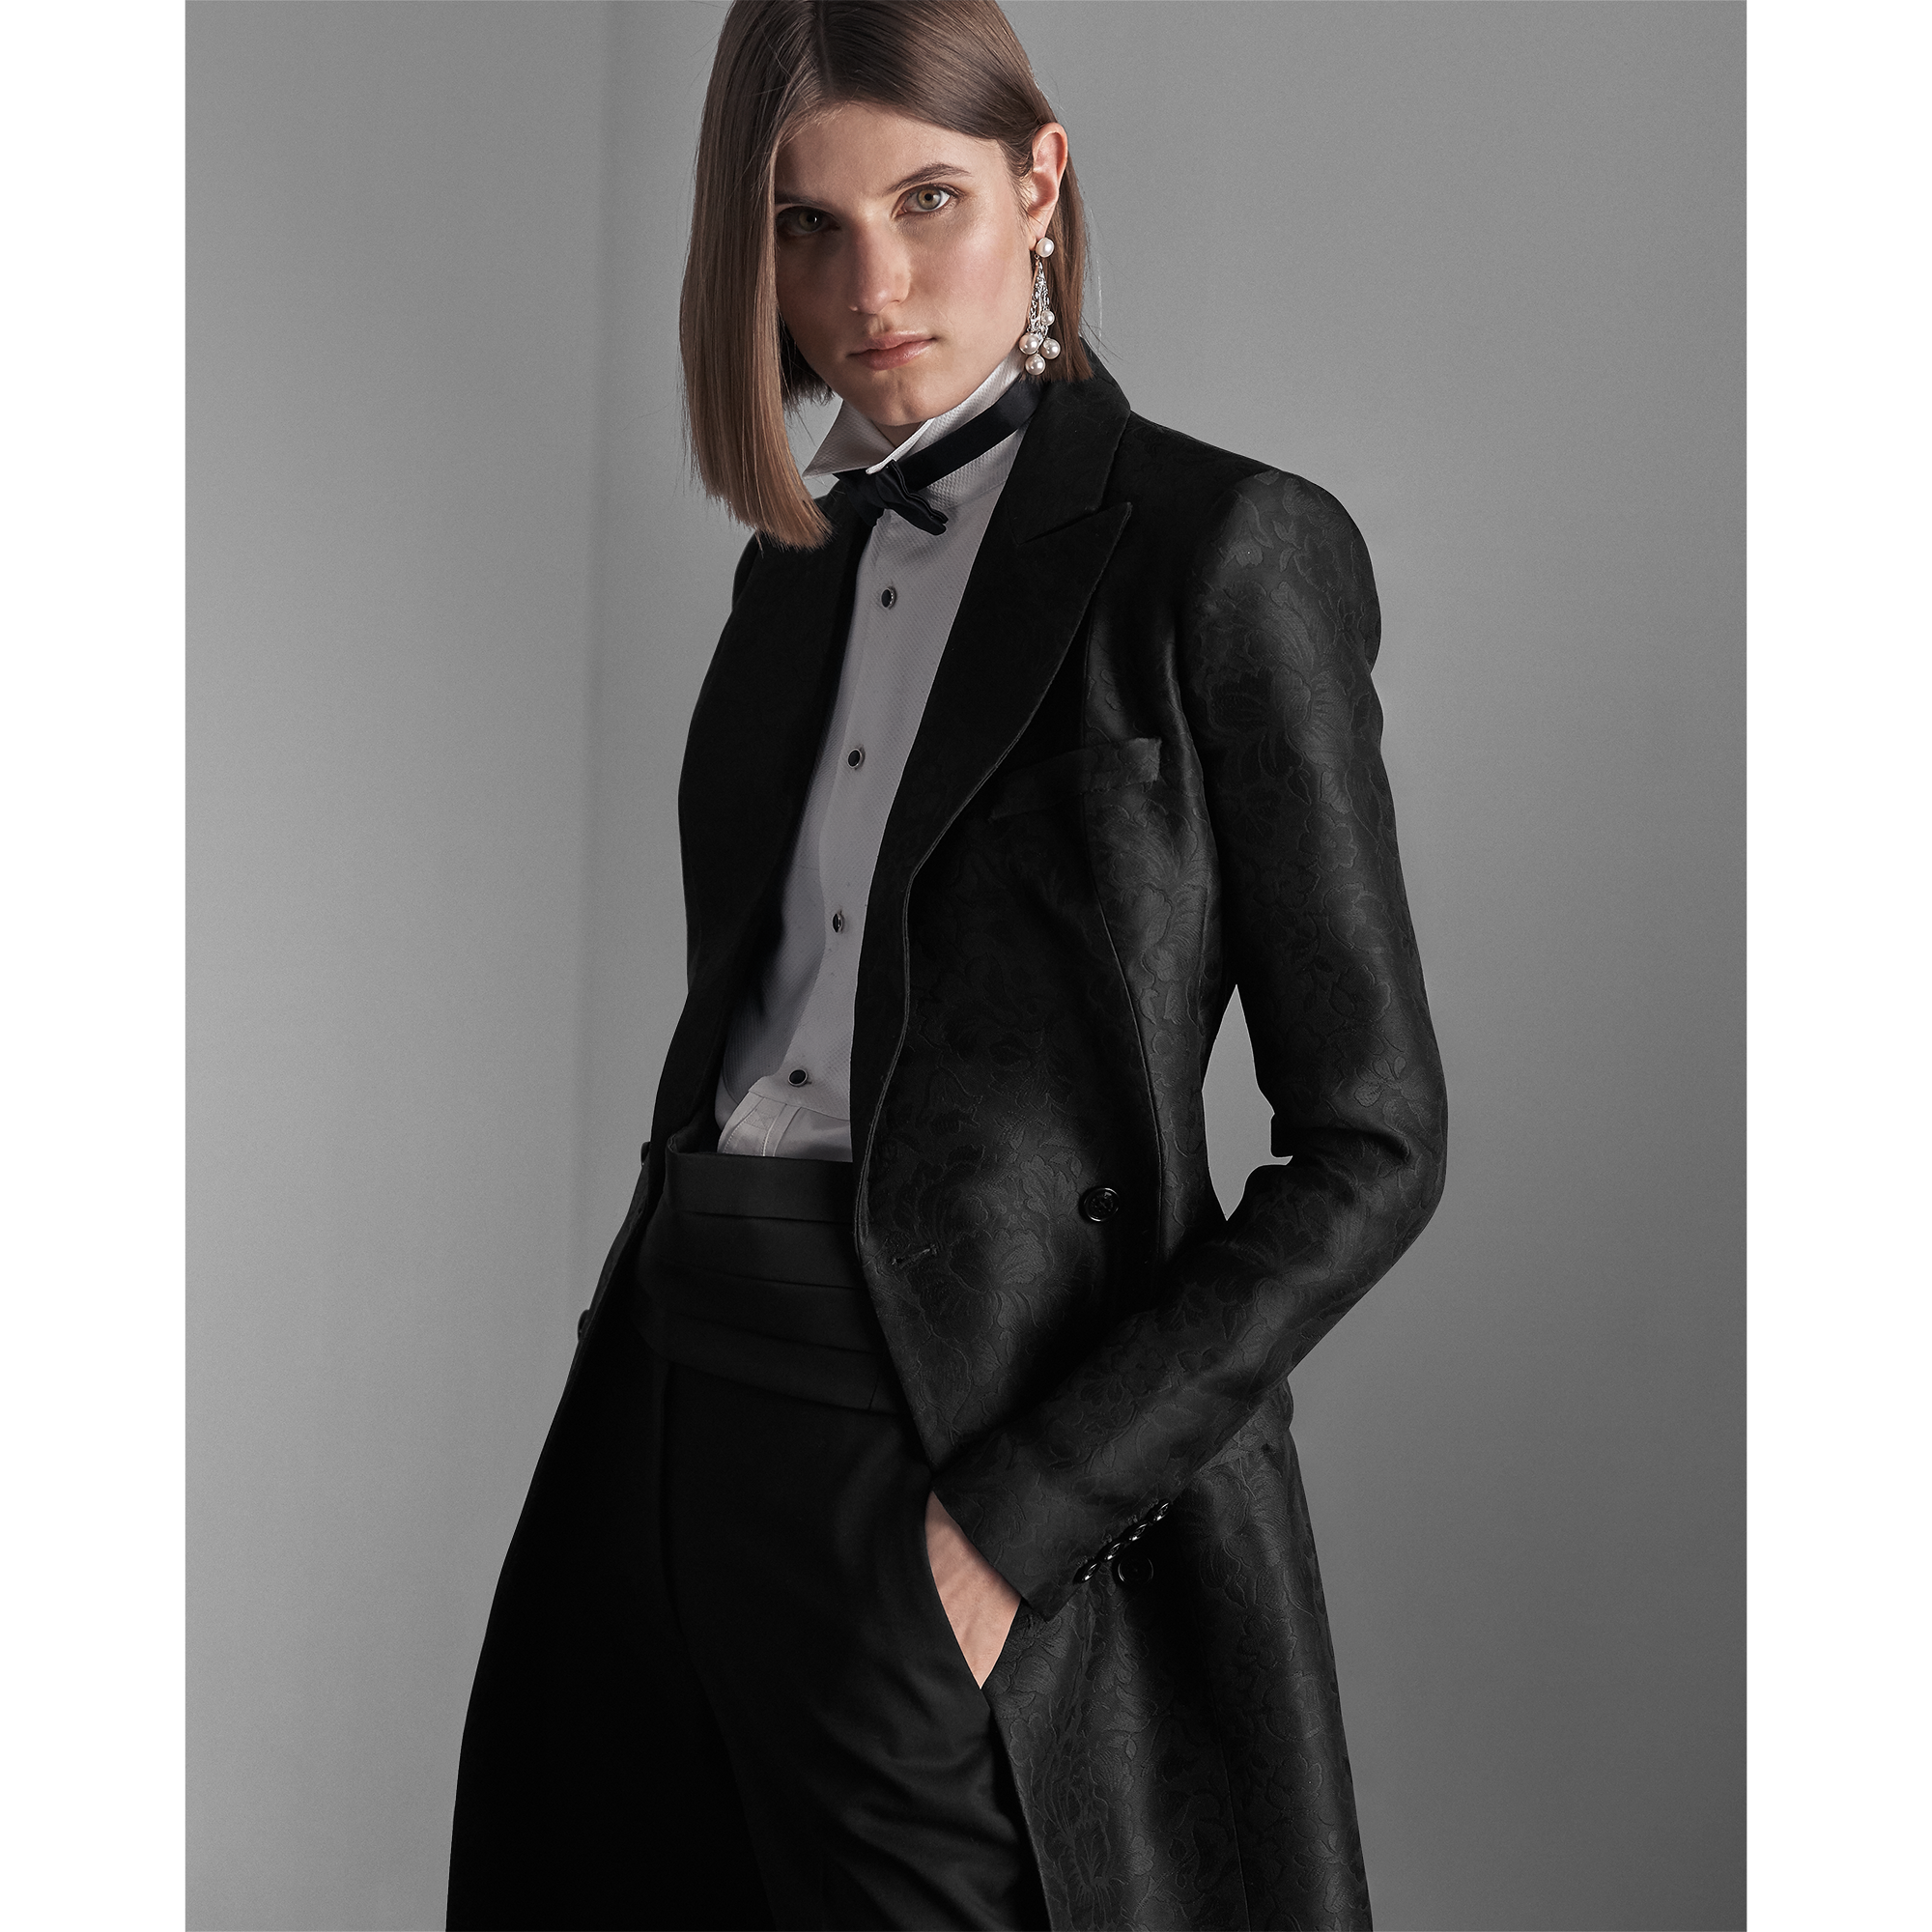 Ralph Lauren Cyrene Jacquard Coat Dress. 5